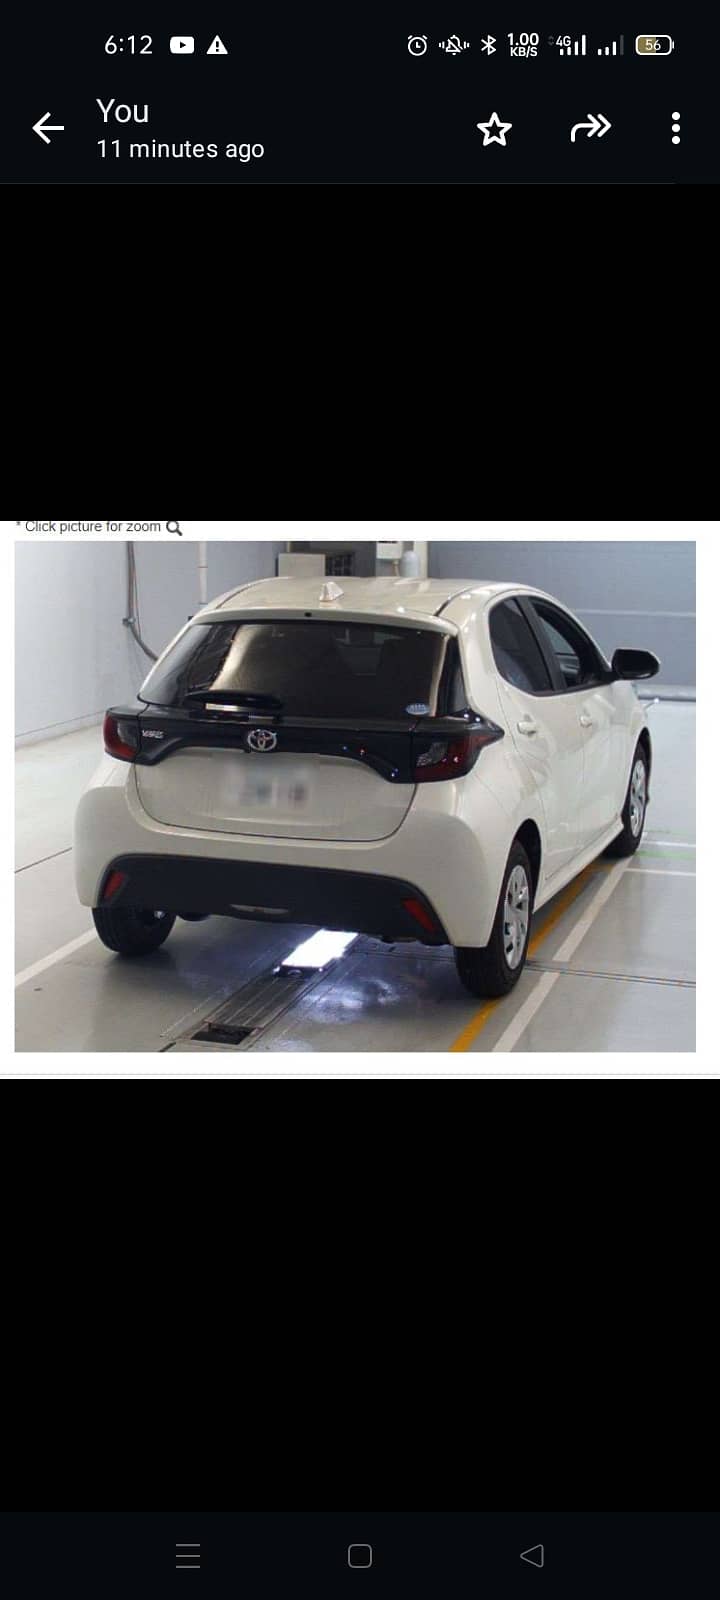 Toyota Yaris hashback full option X package 4.5 10